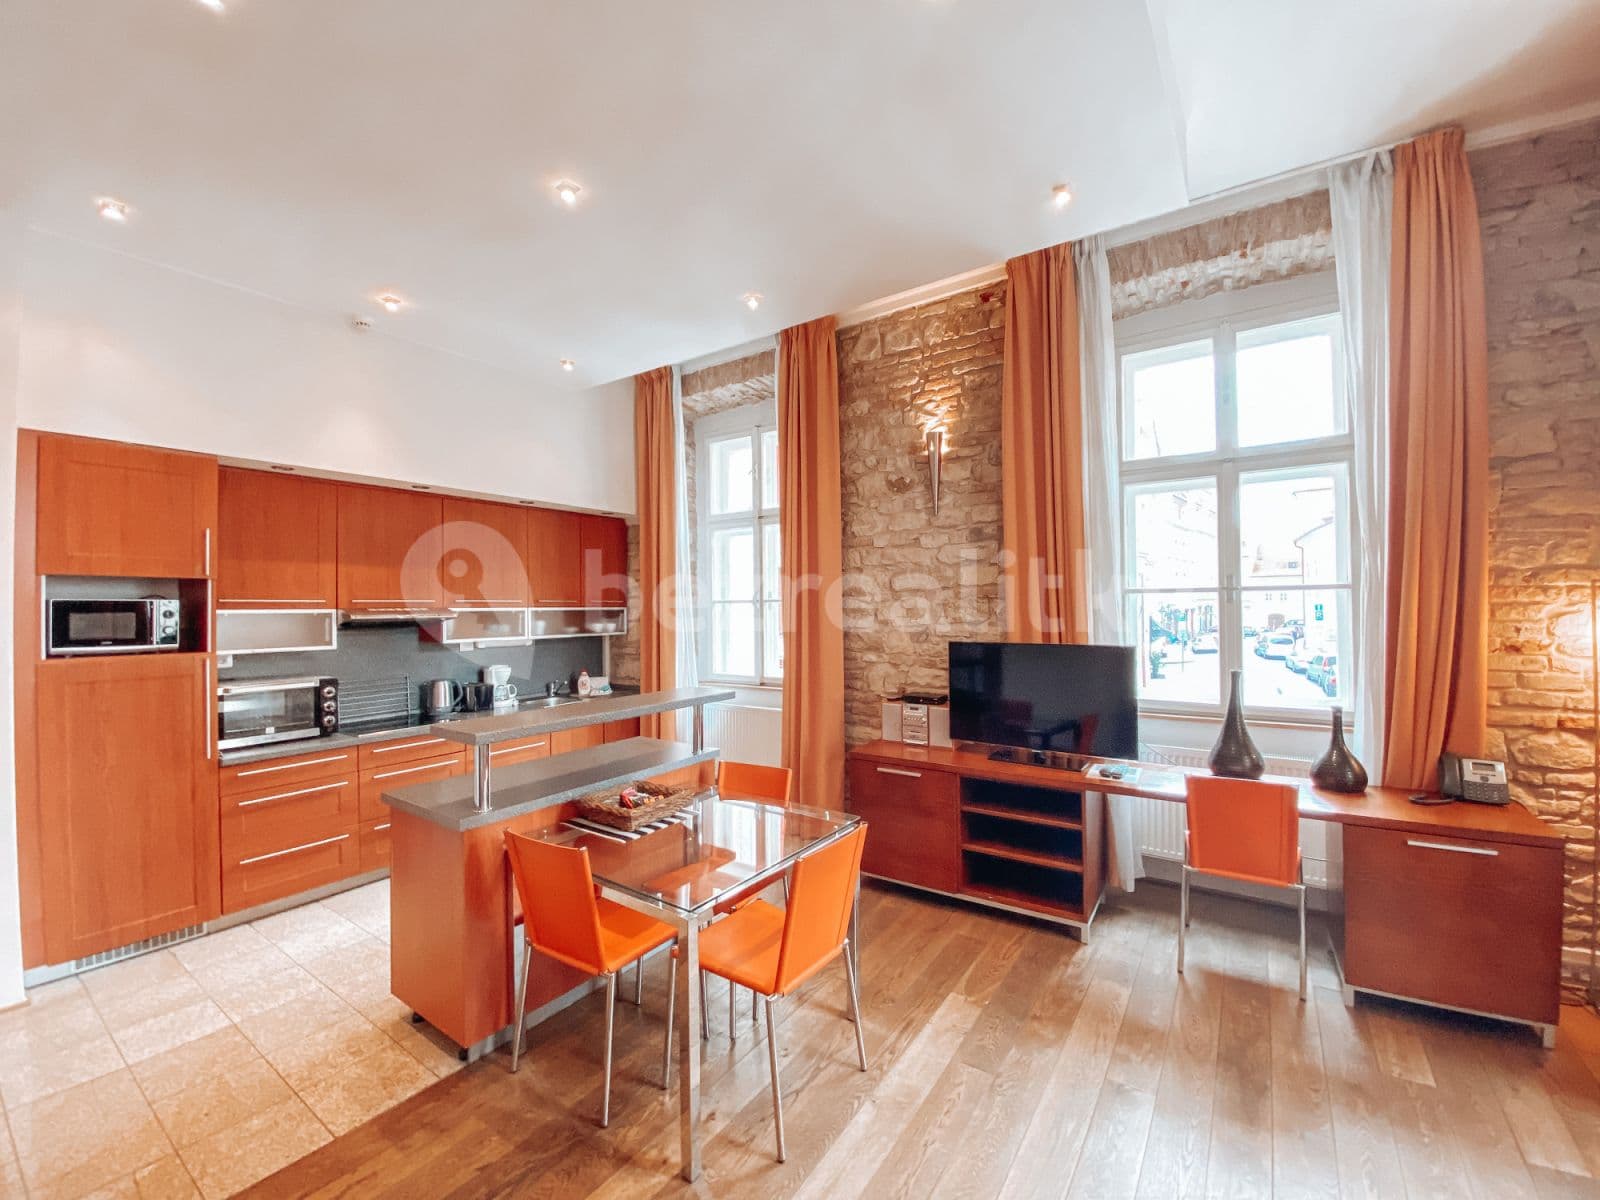 1 bedroom with open-plan kitchen flat to rent, 53 m², Rybná, Prague, Prague